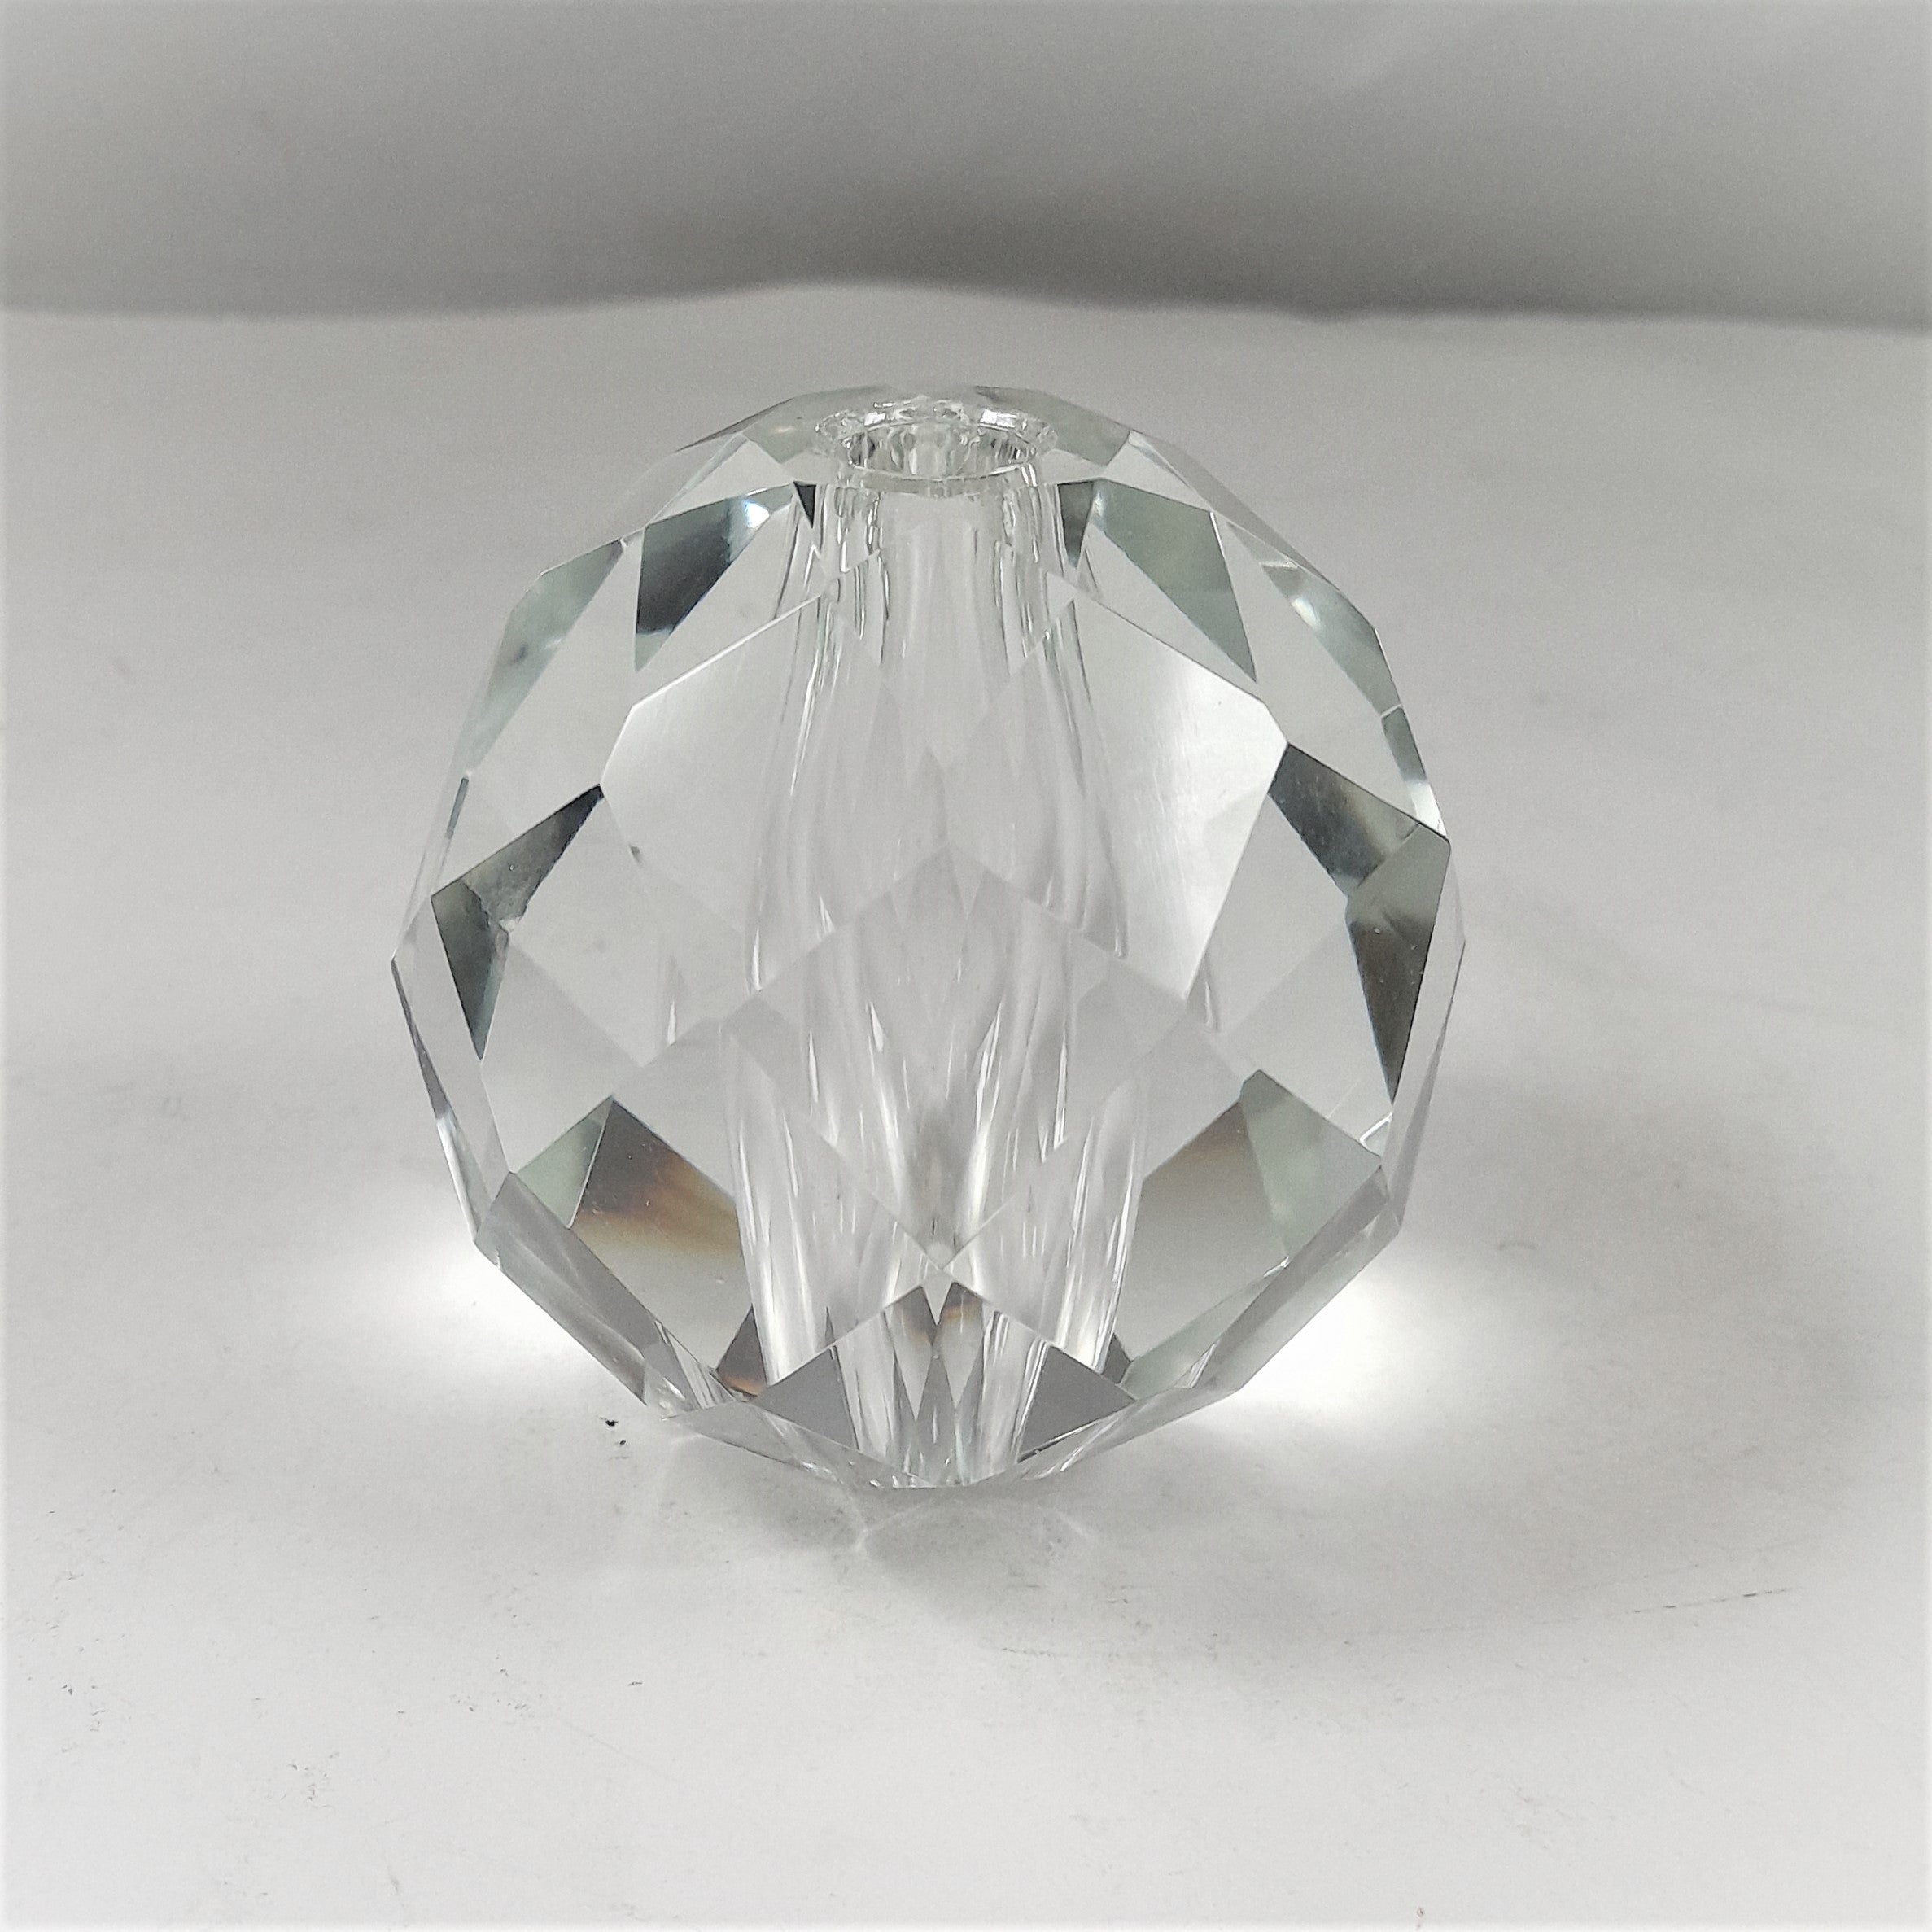 Crystal Ball - 3" Diameter Crystal for Lighting